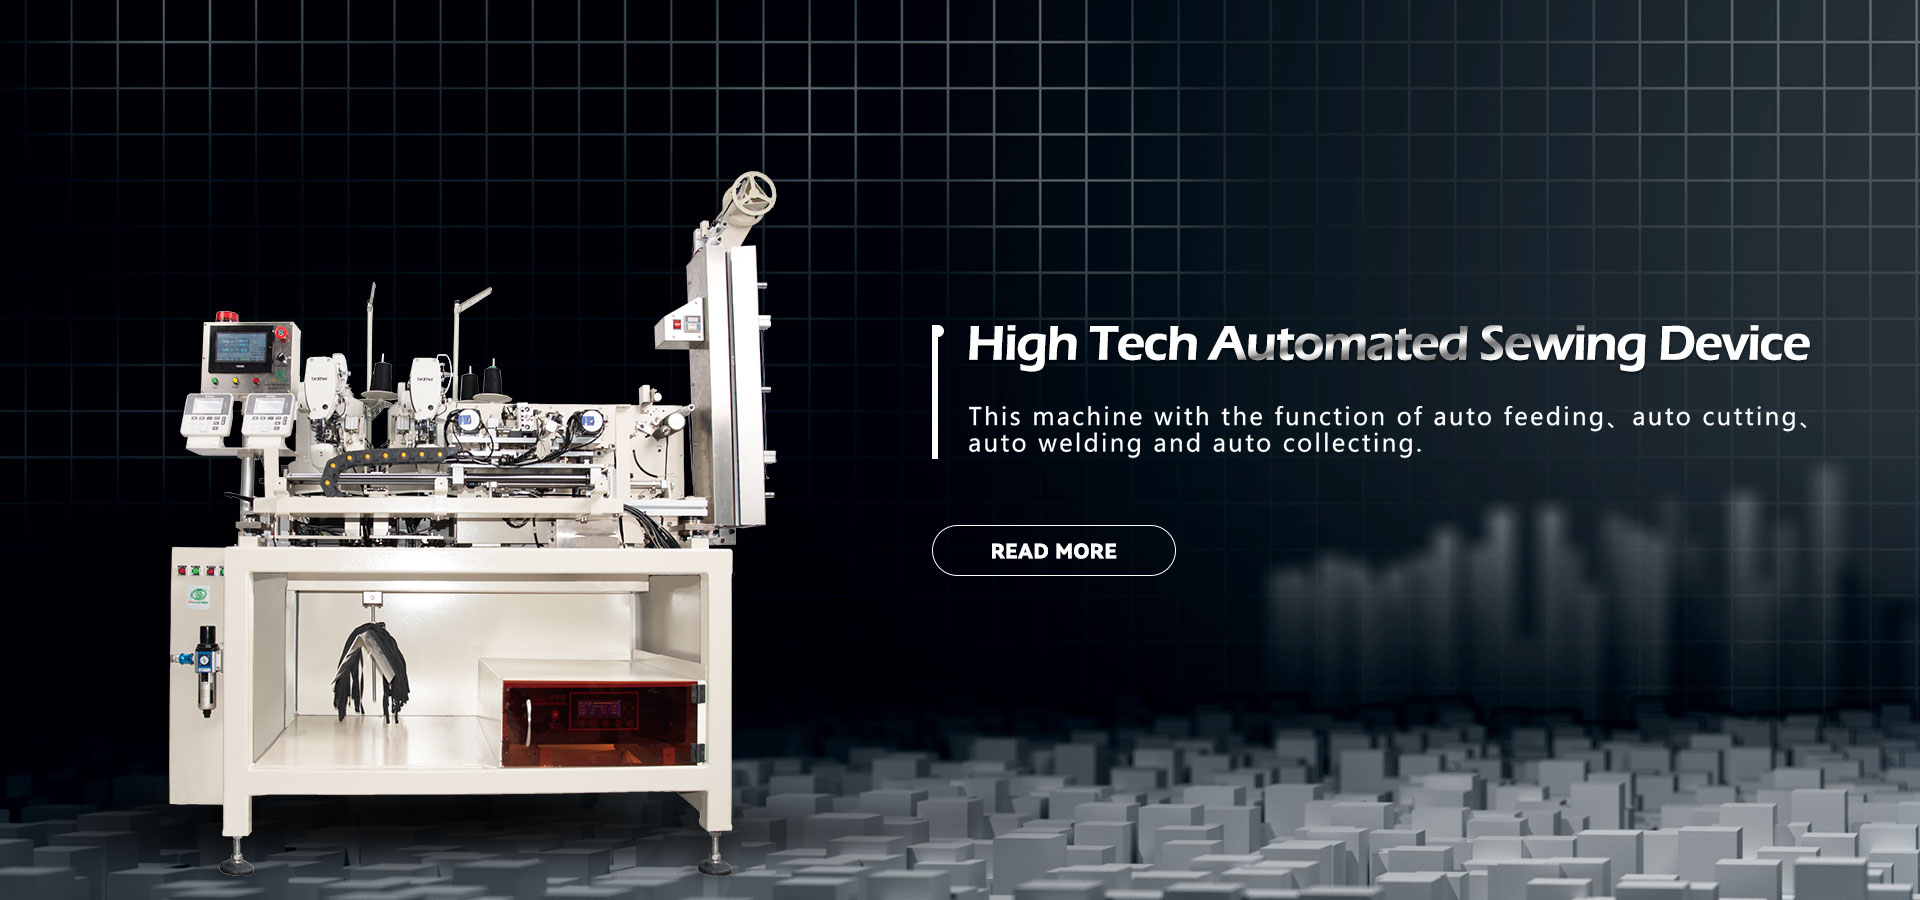 Fabricantes de dispositivos de costura automatizados de alta tecnologia